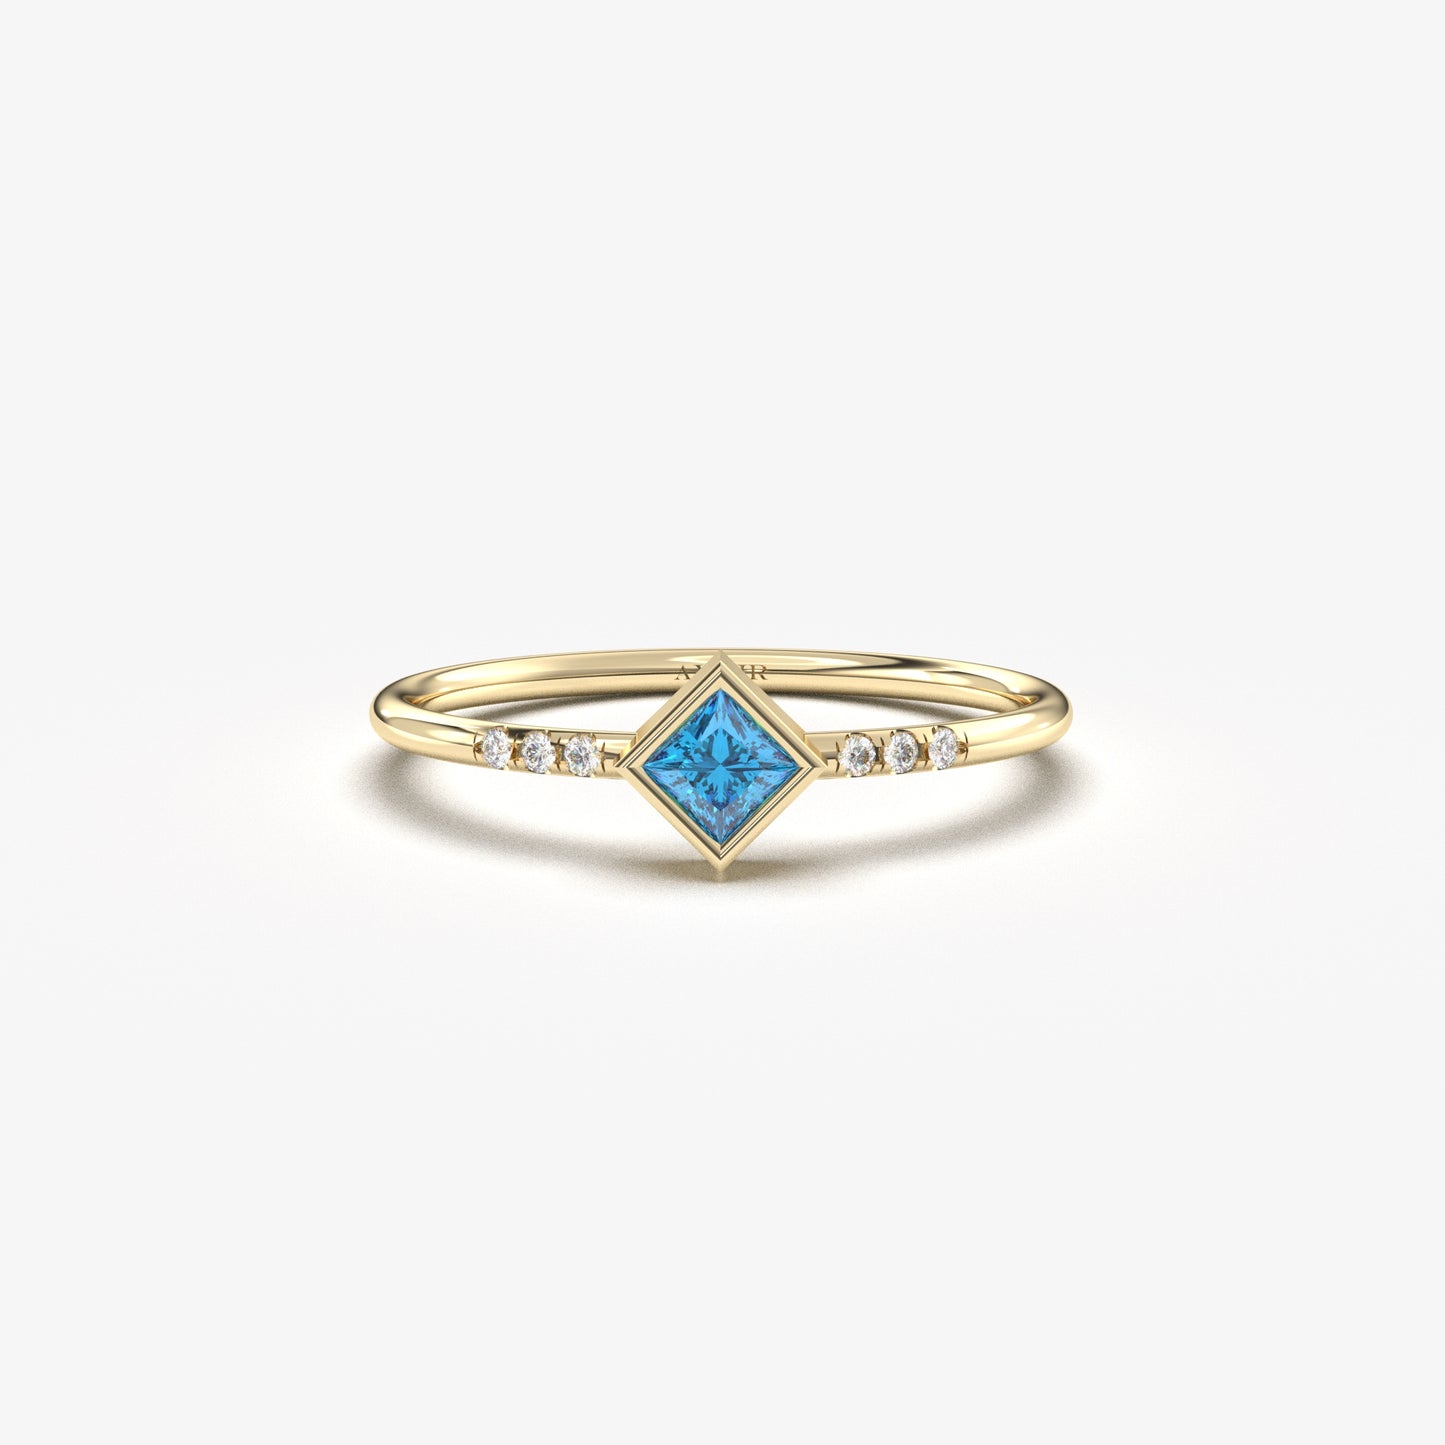 14K Princess Blue Topaz Gold Ring - 2S165SKY